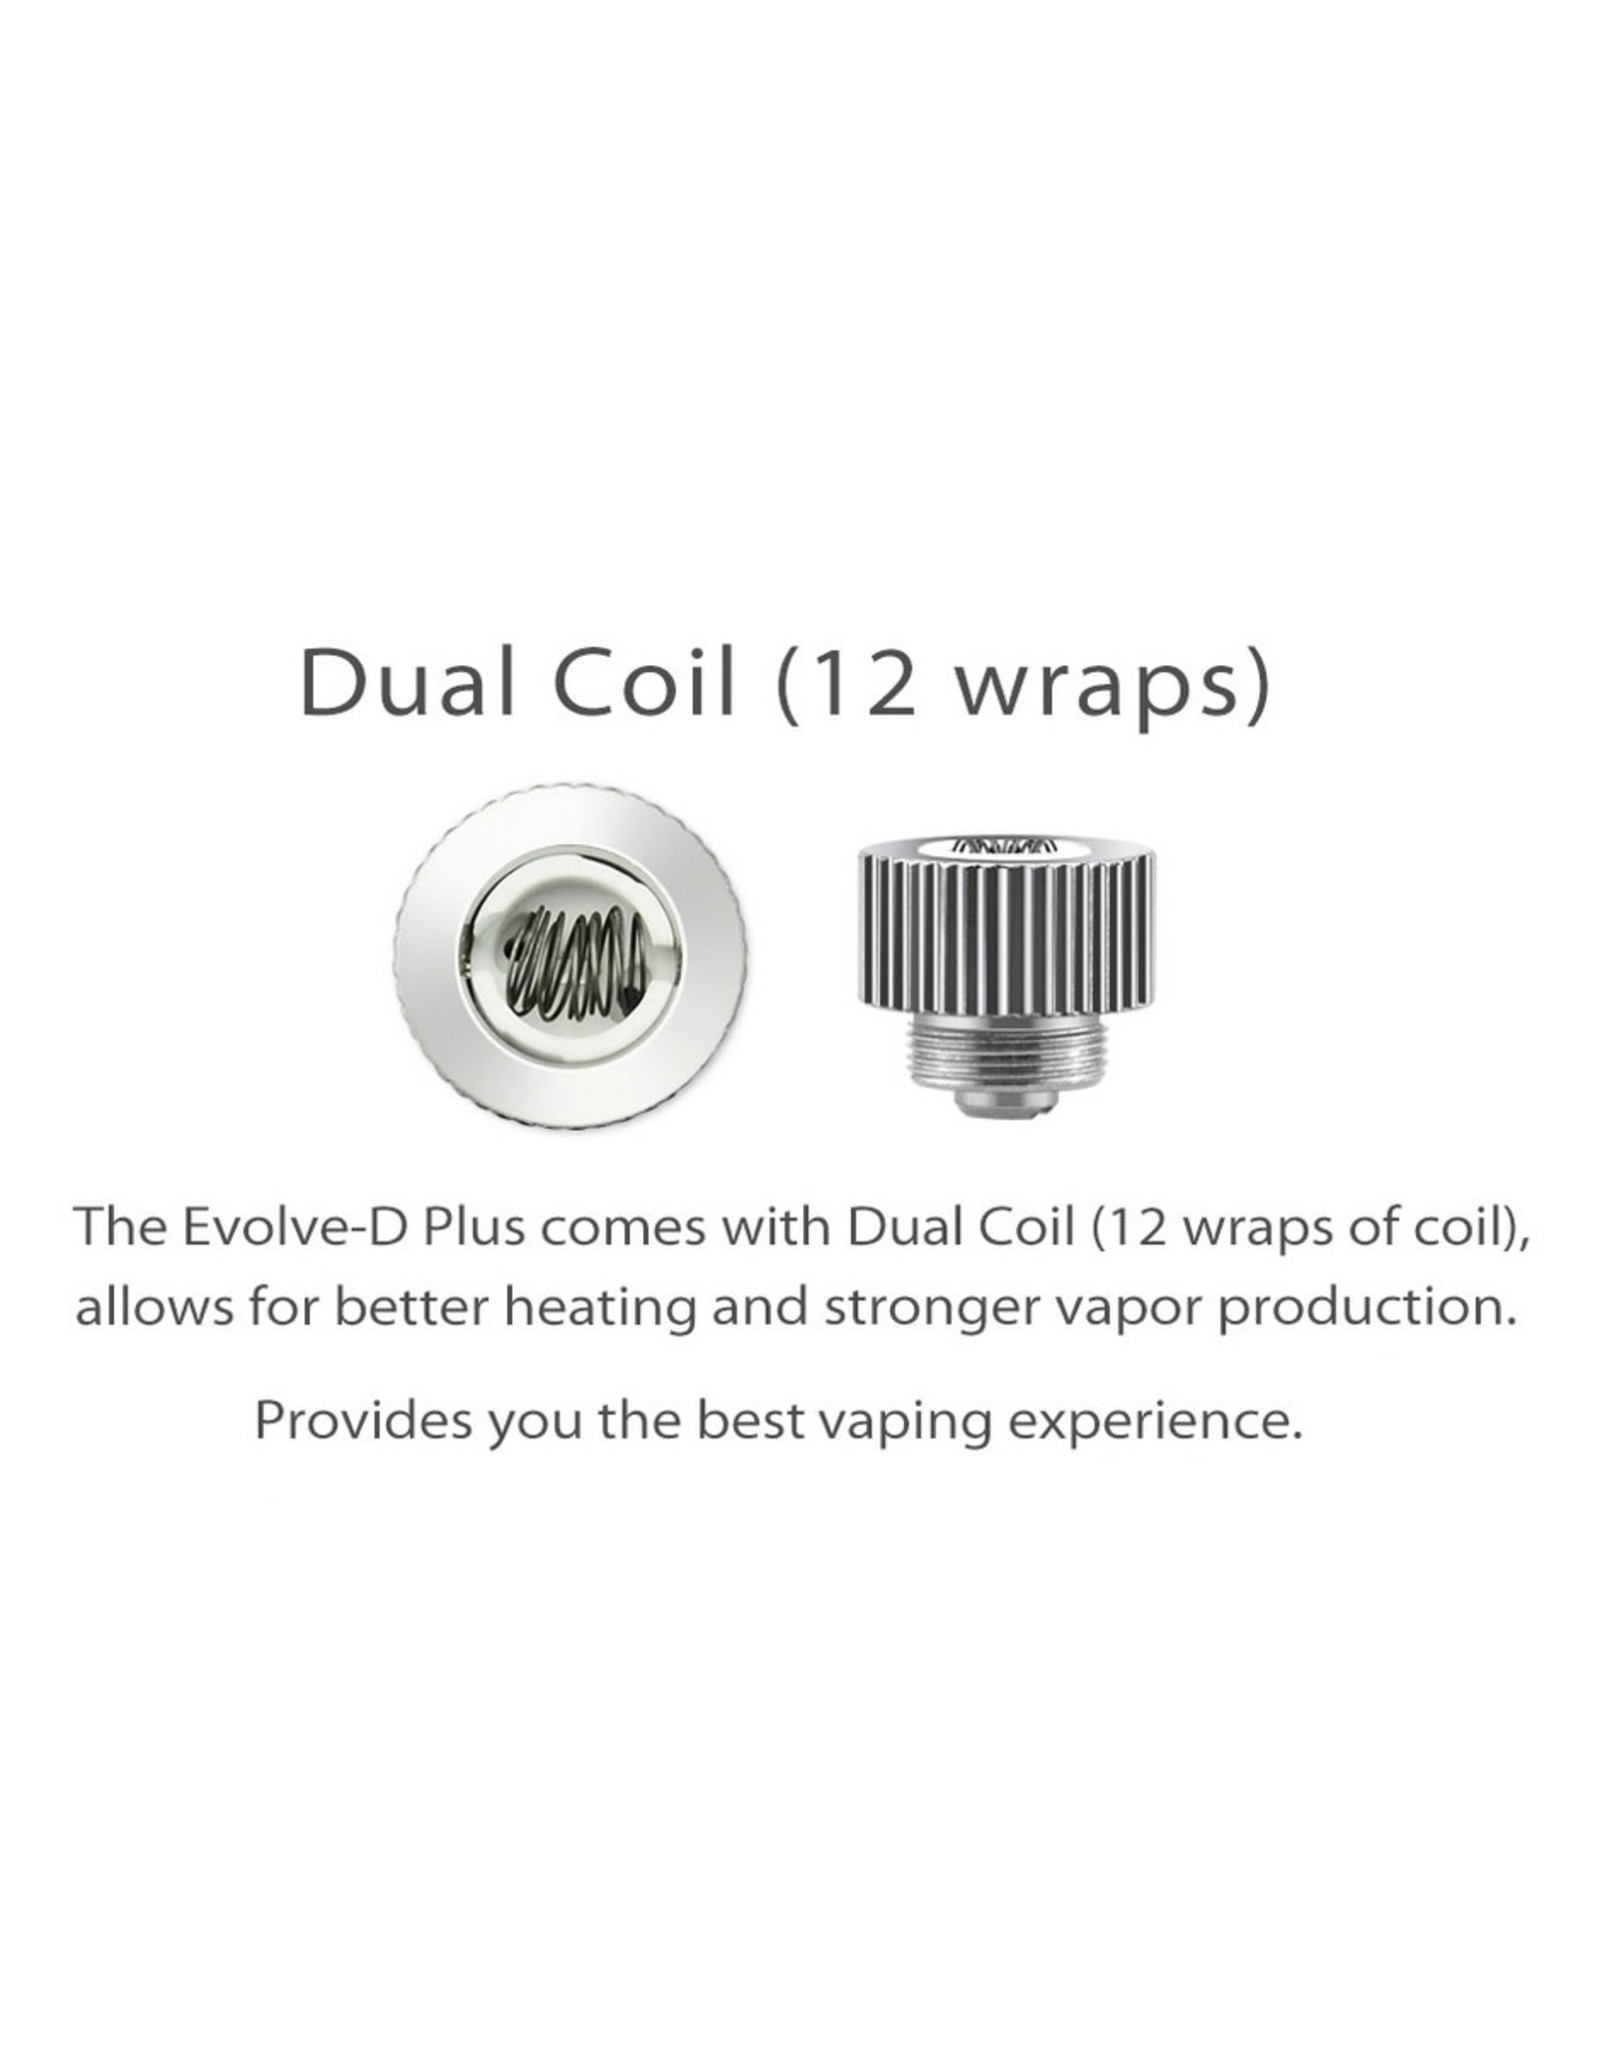 Yocan Evolve Plus Quartz Dual Coil Vaporizer